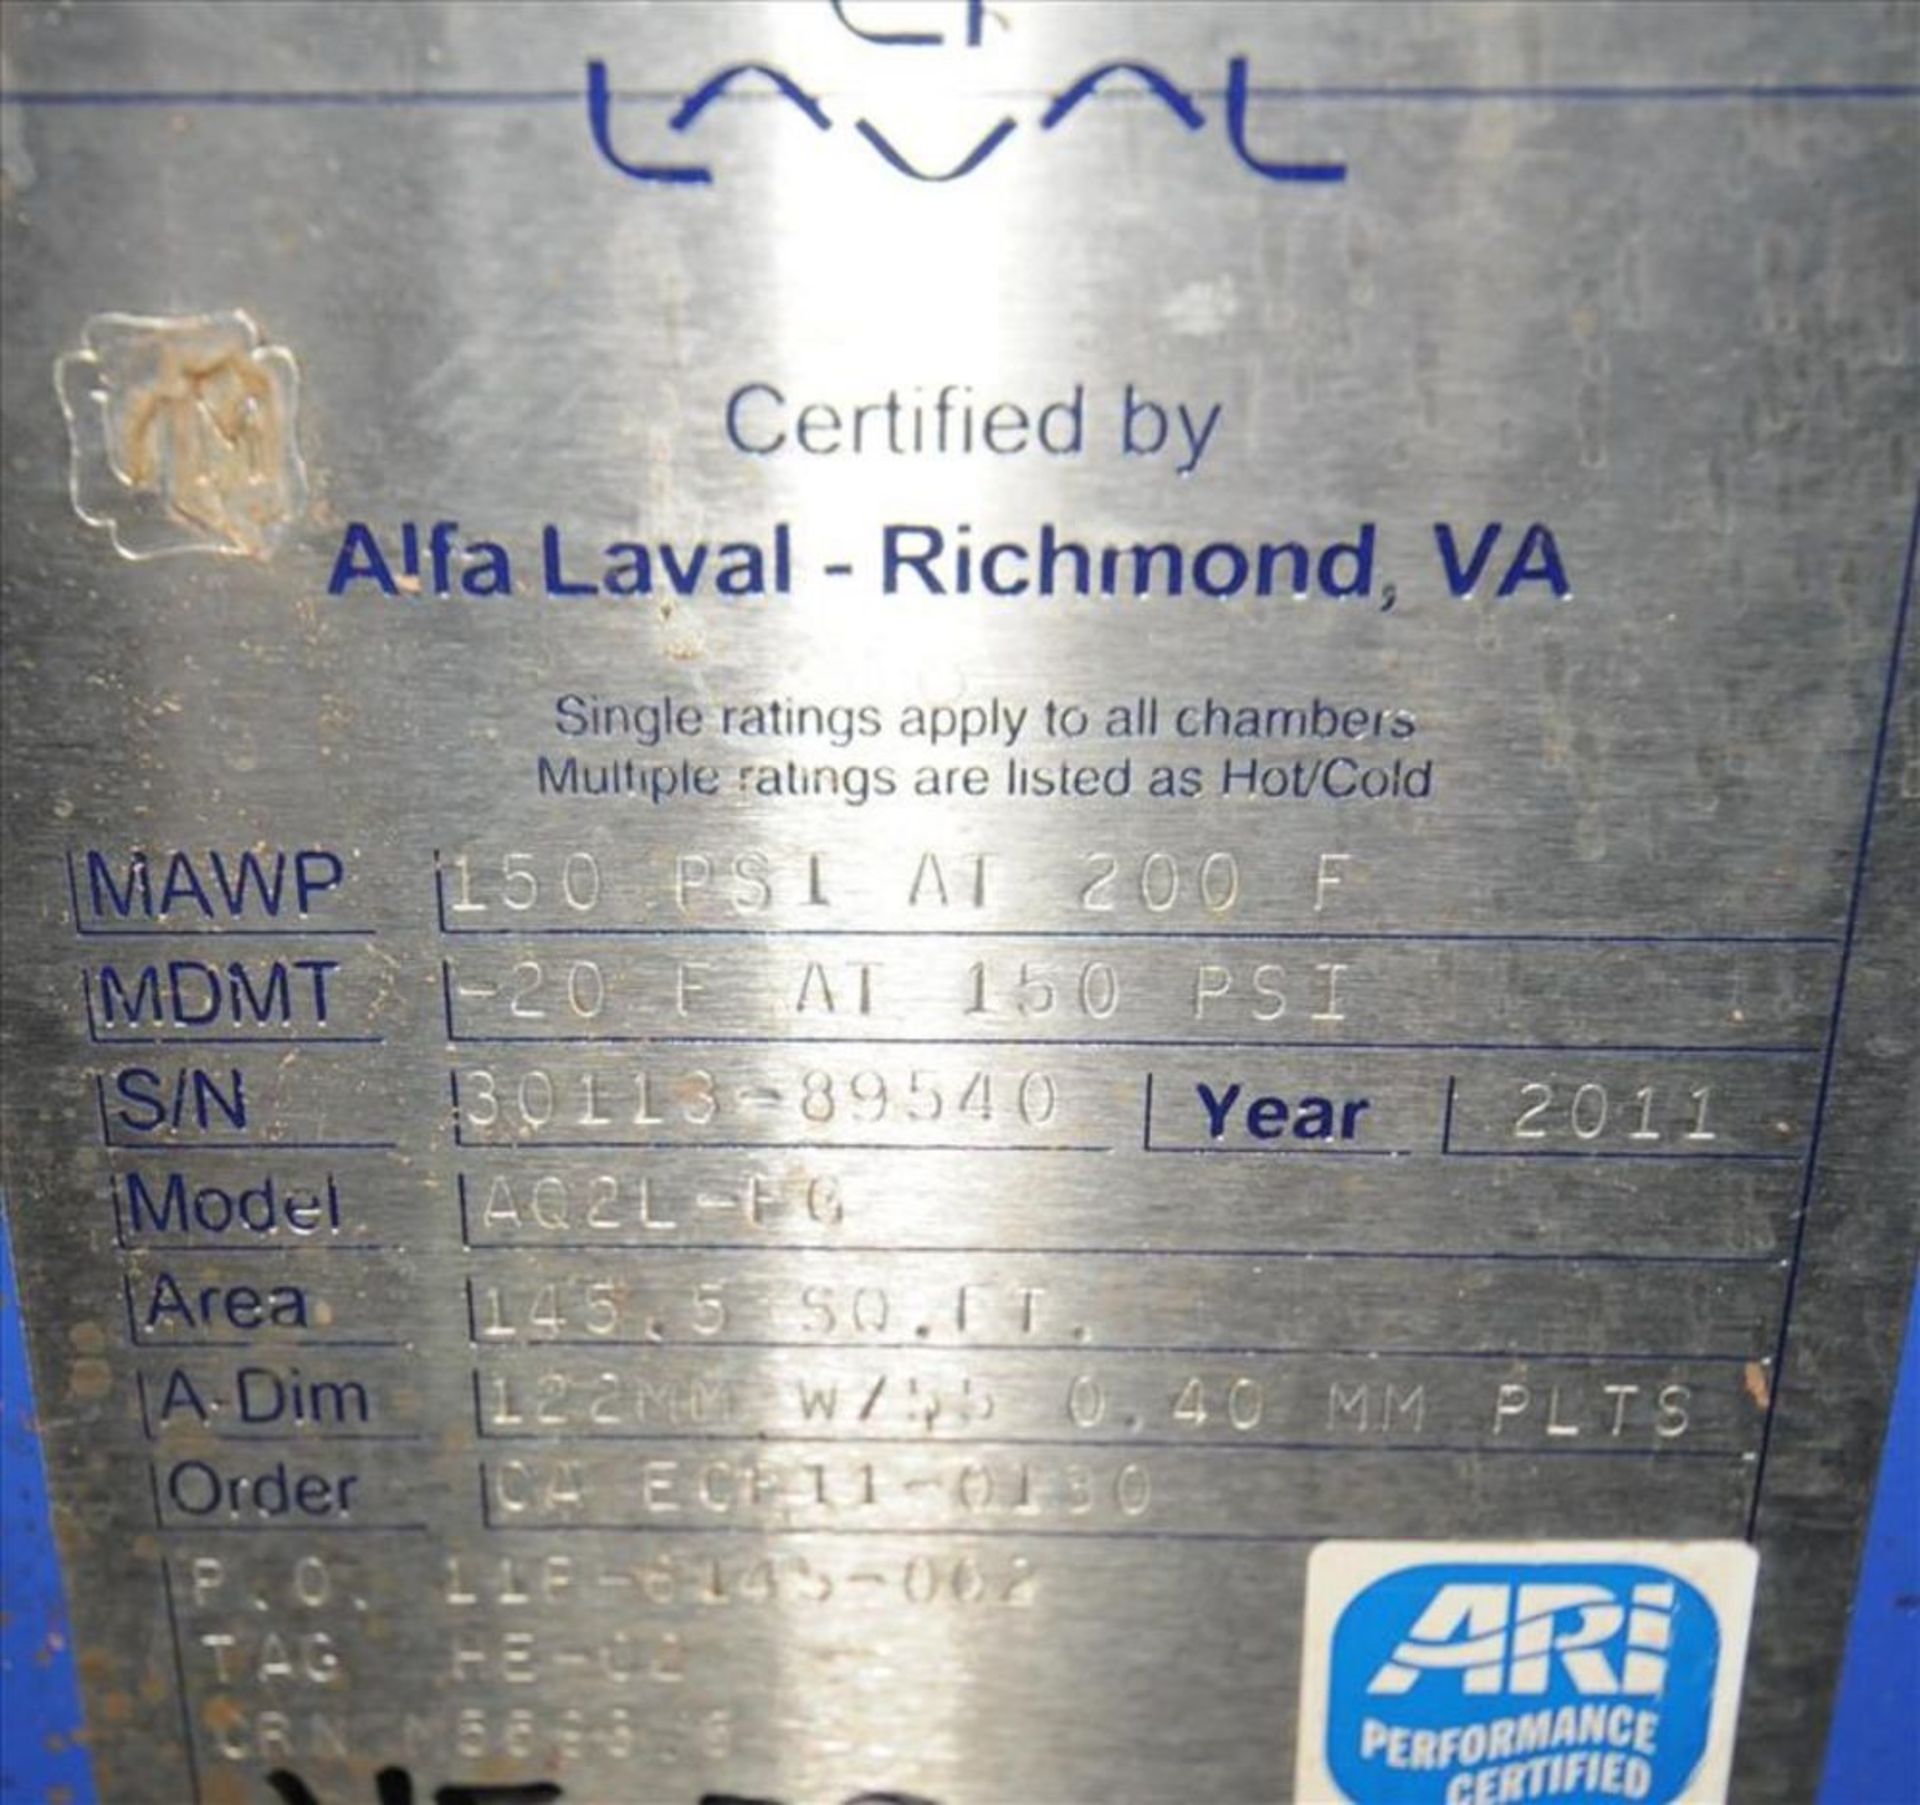 Alfa Laval plate HEX mod. no. AQ2L-FG ser. no. 30113-89540, 150psi @ 200deg F, 145. 5sq ft, 122mm ( - Image 2 of 2